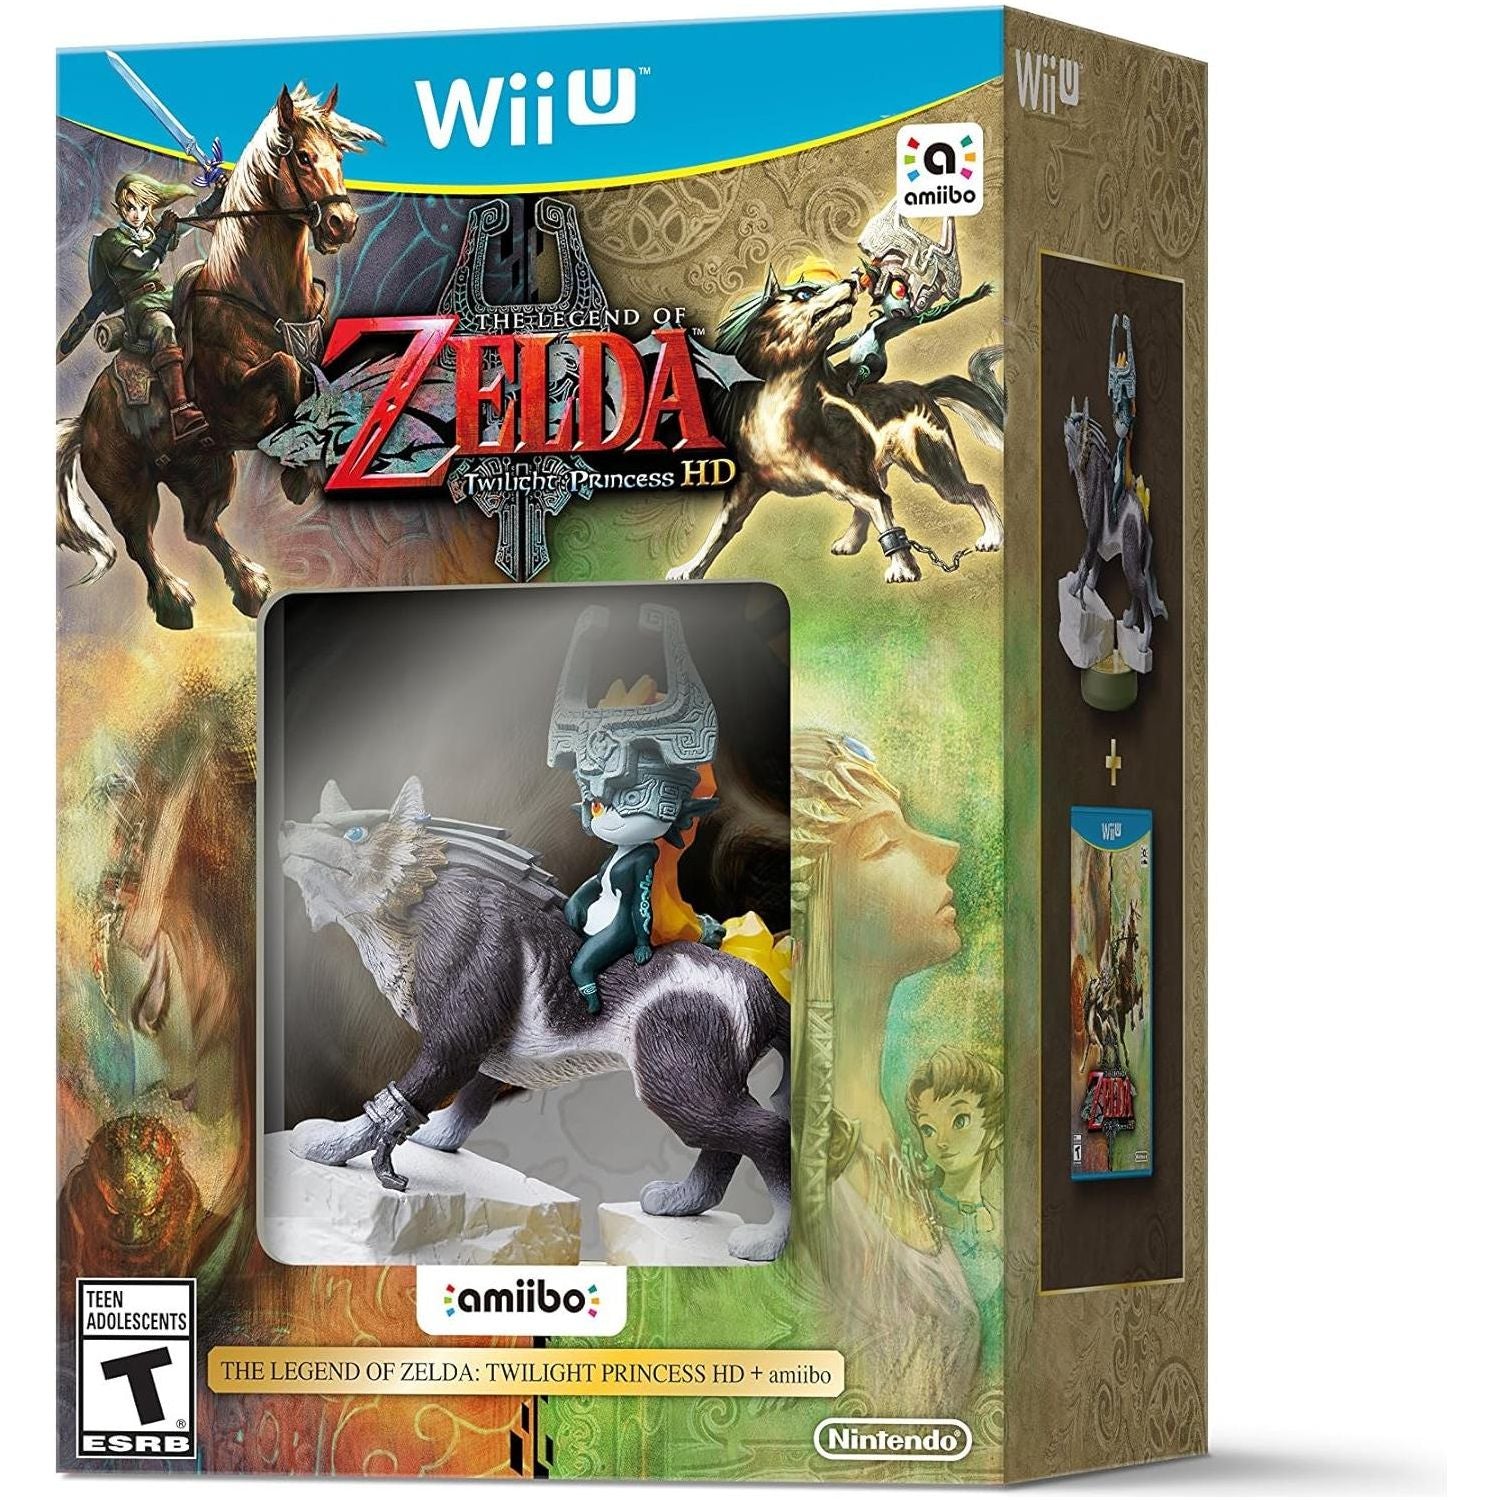 WII U - The Legend of Zelda Twilight Princess HD + Wolf Link Amiibo